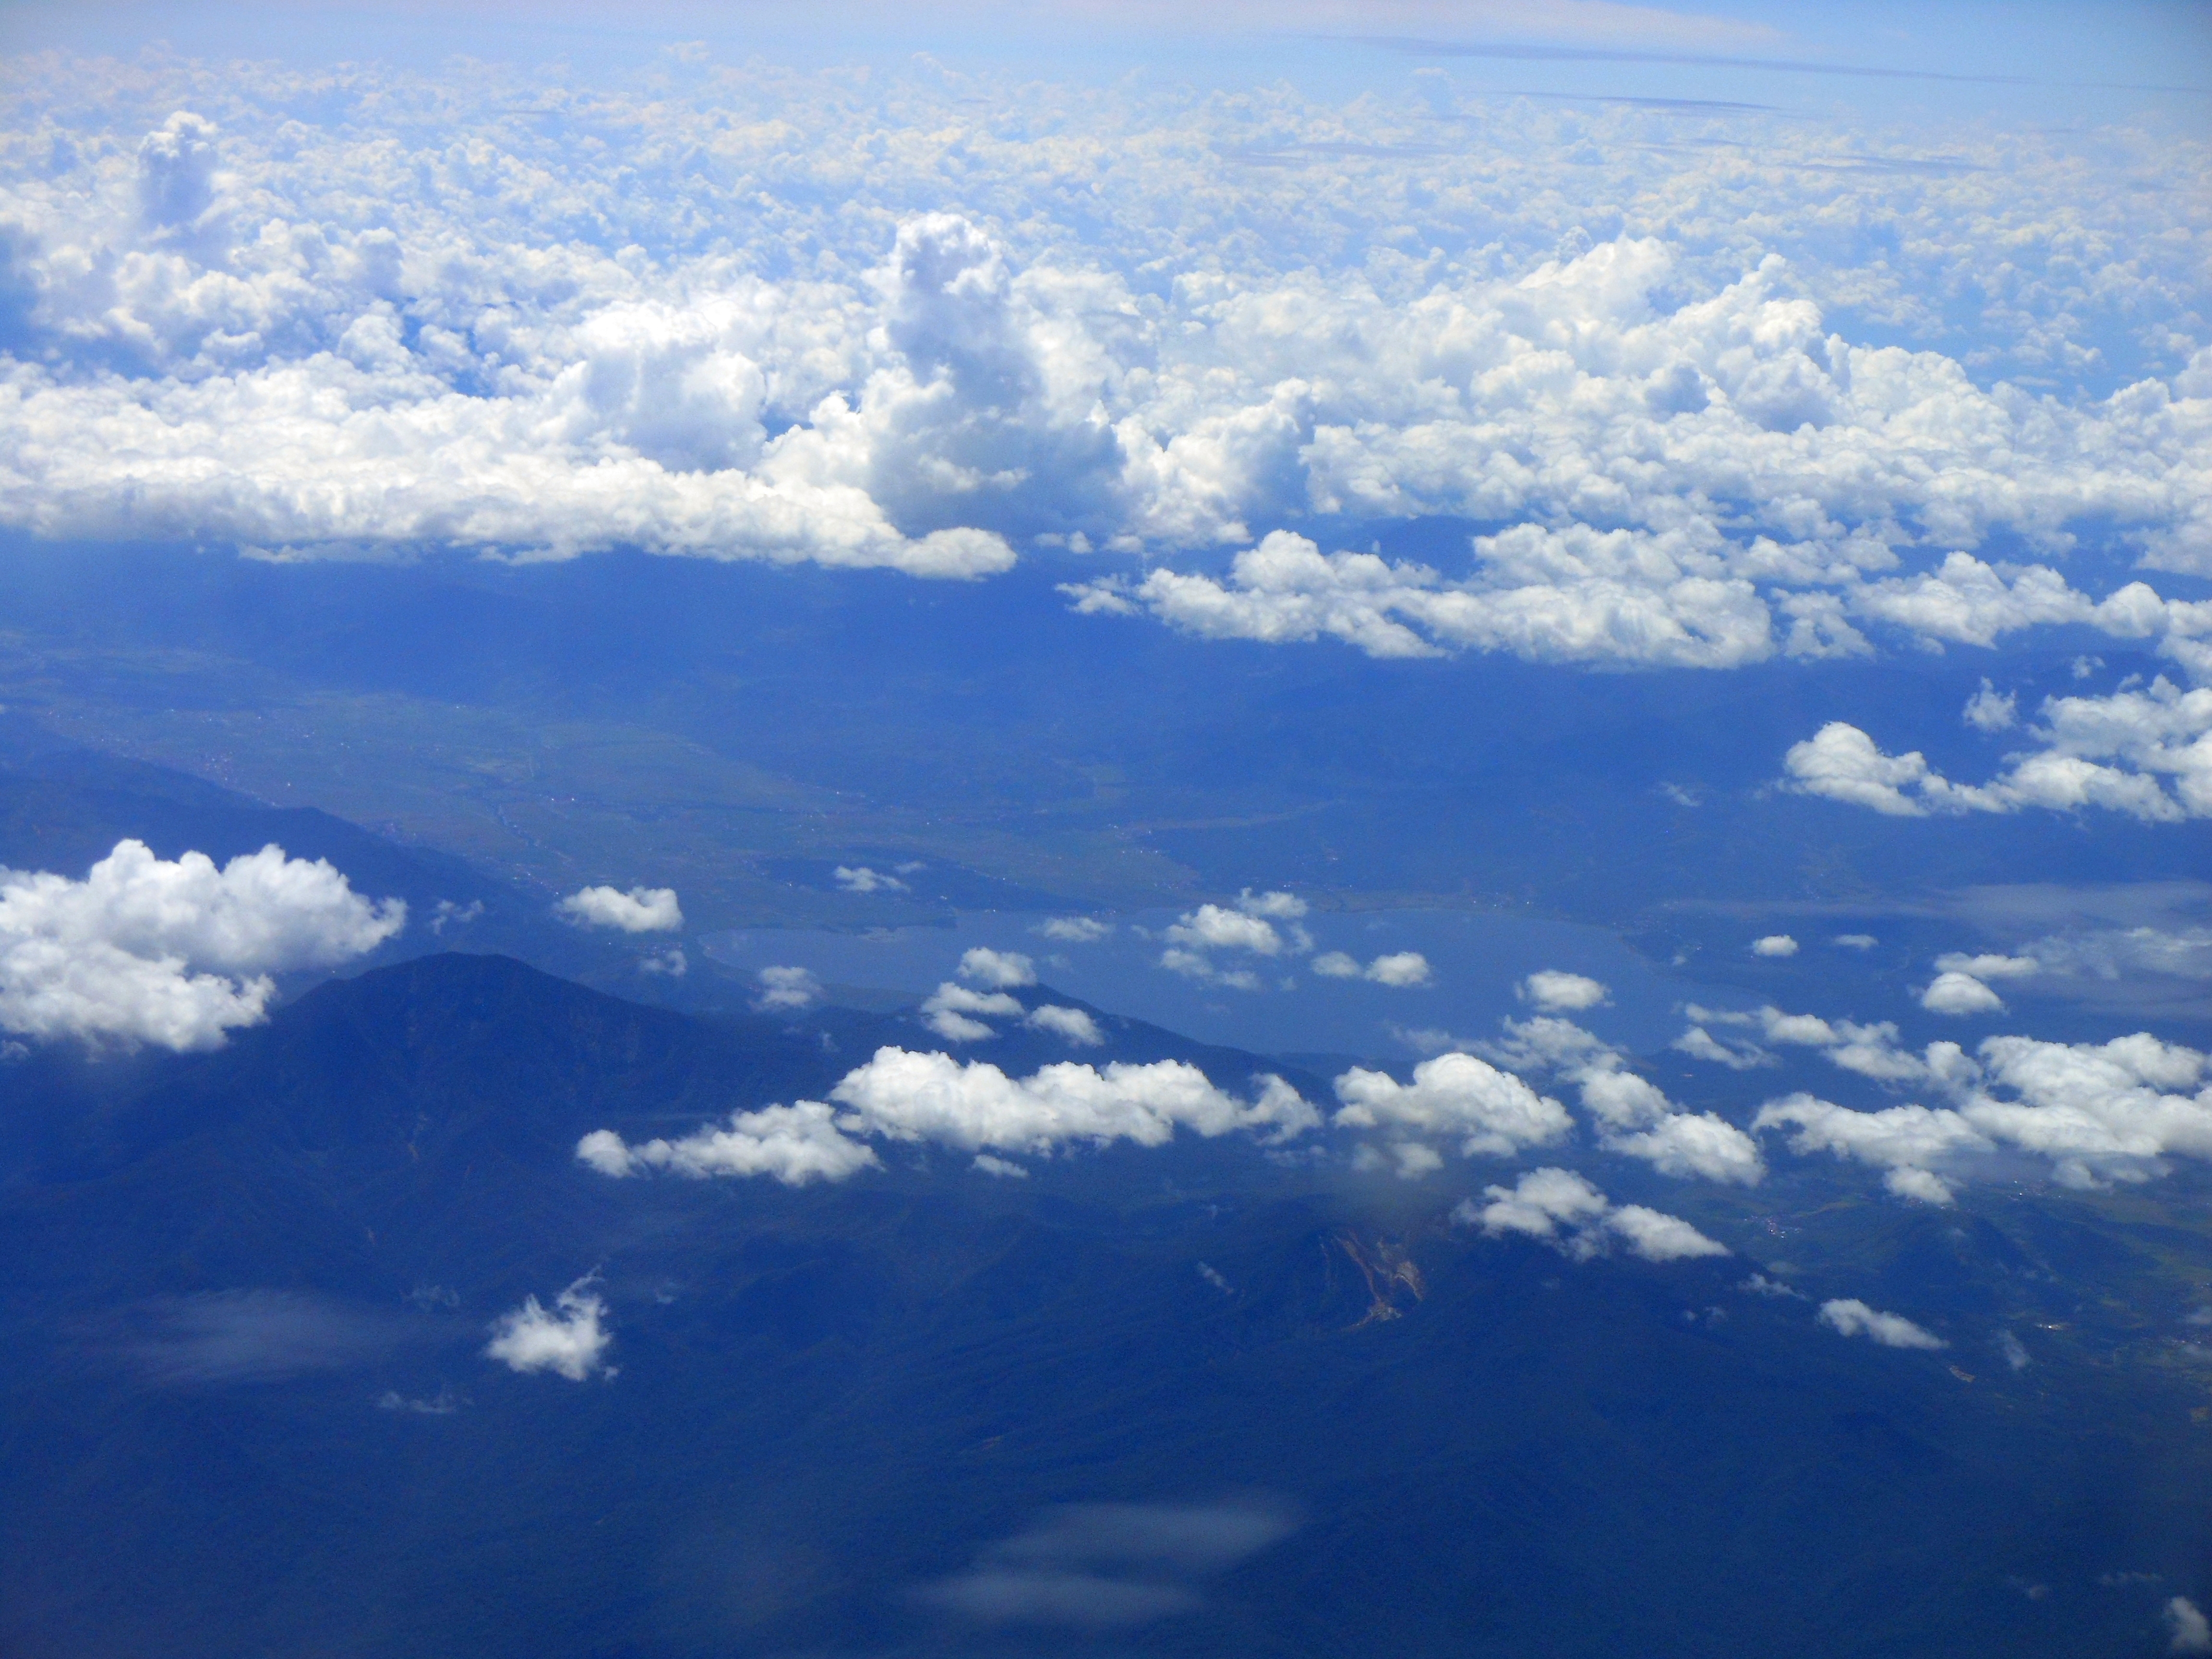 raya and lake kerinci from above